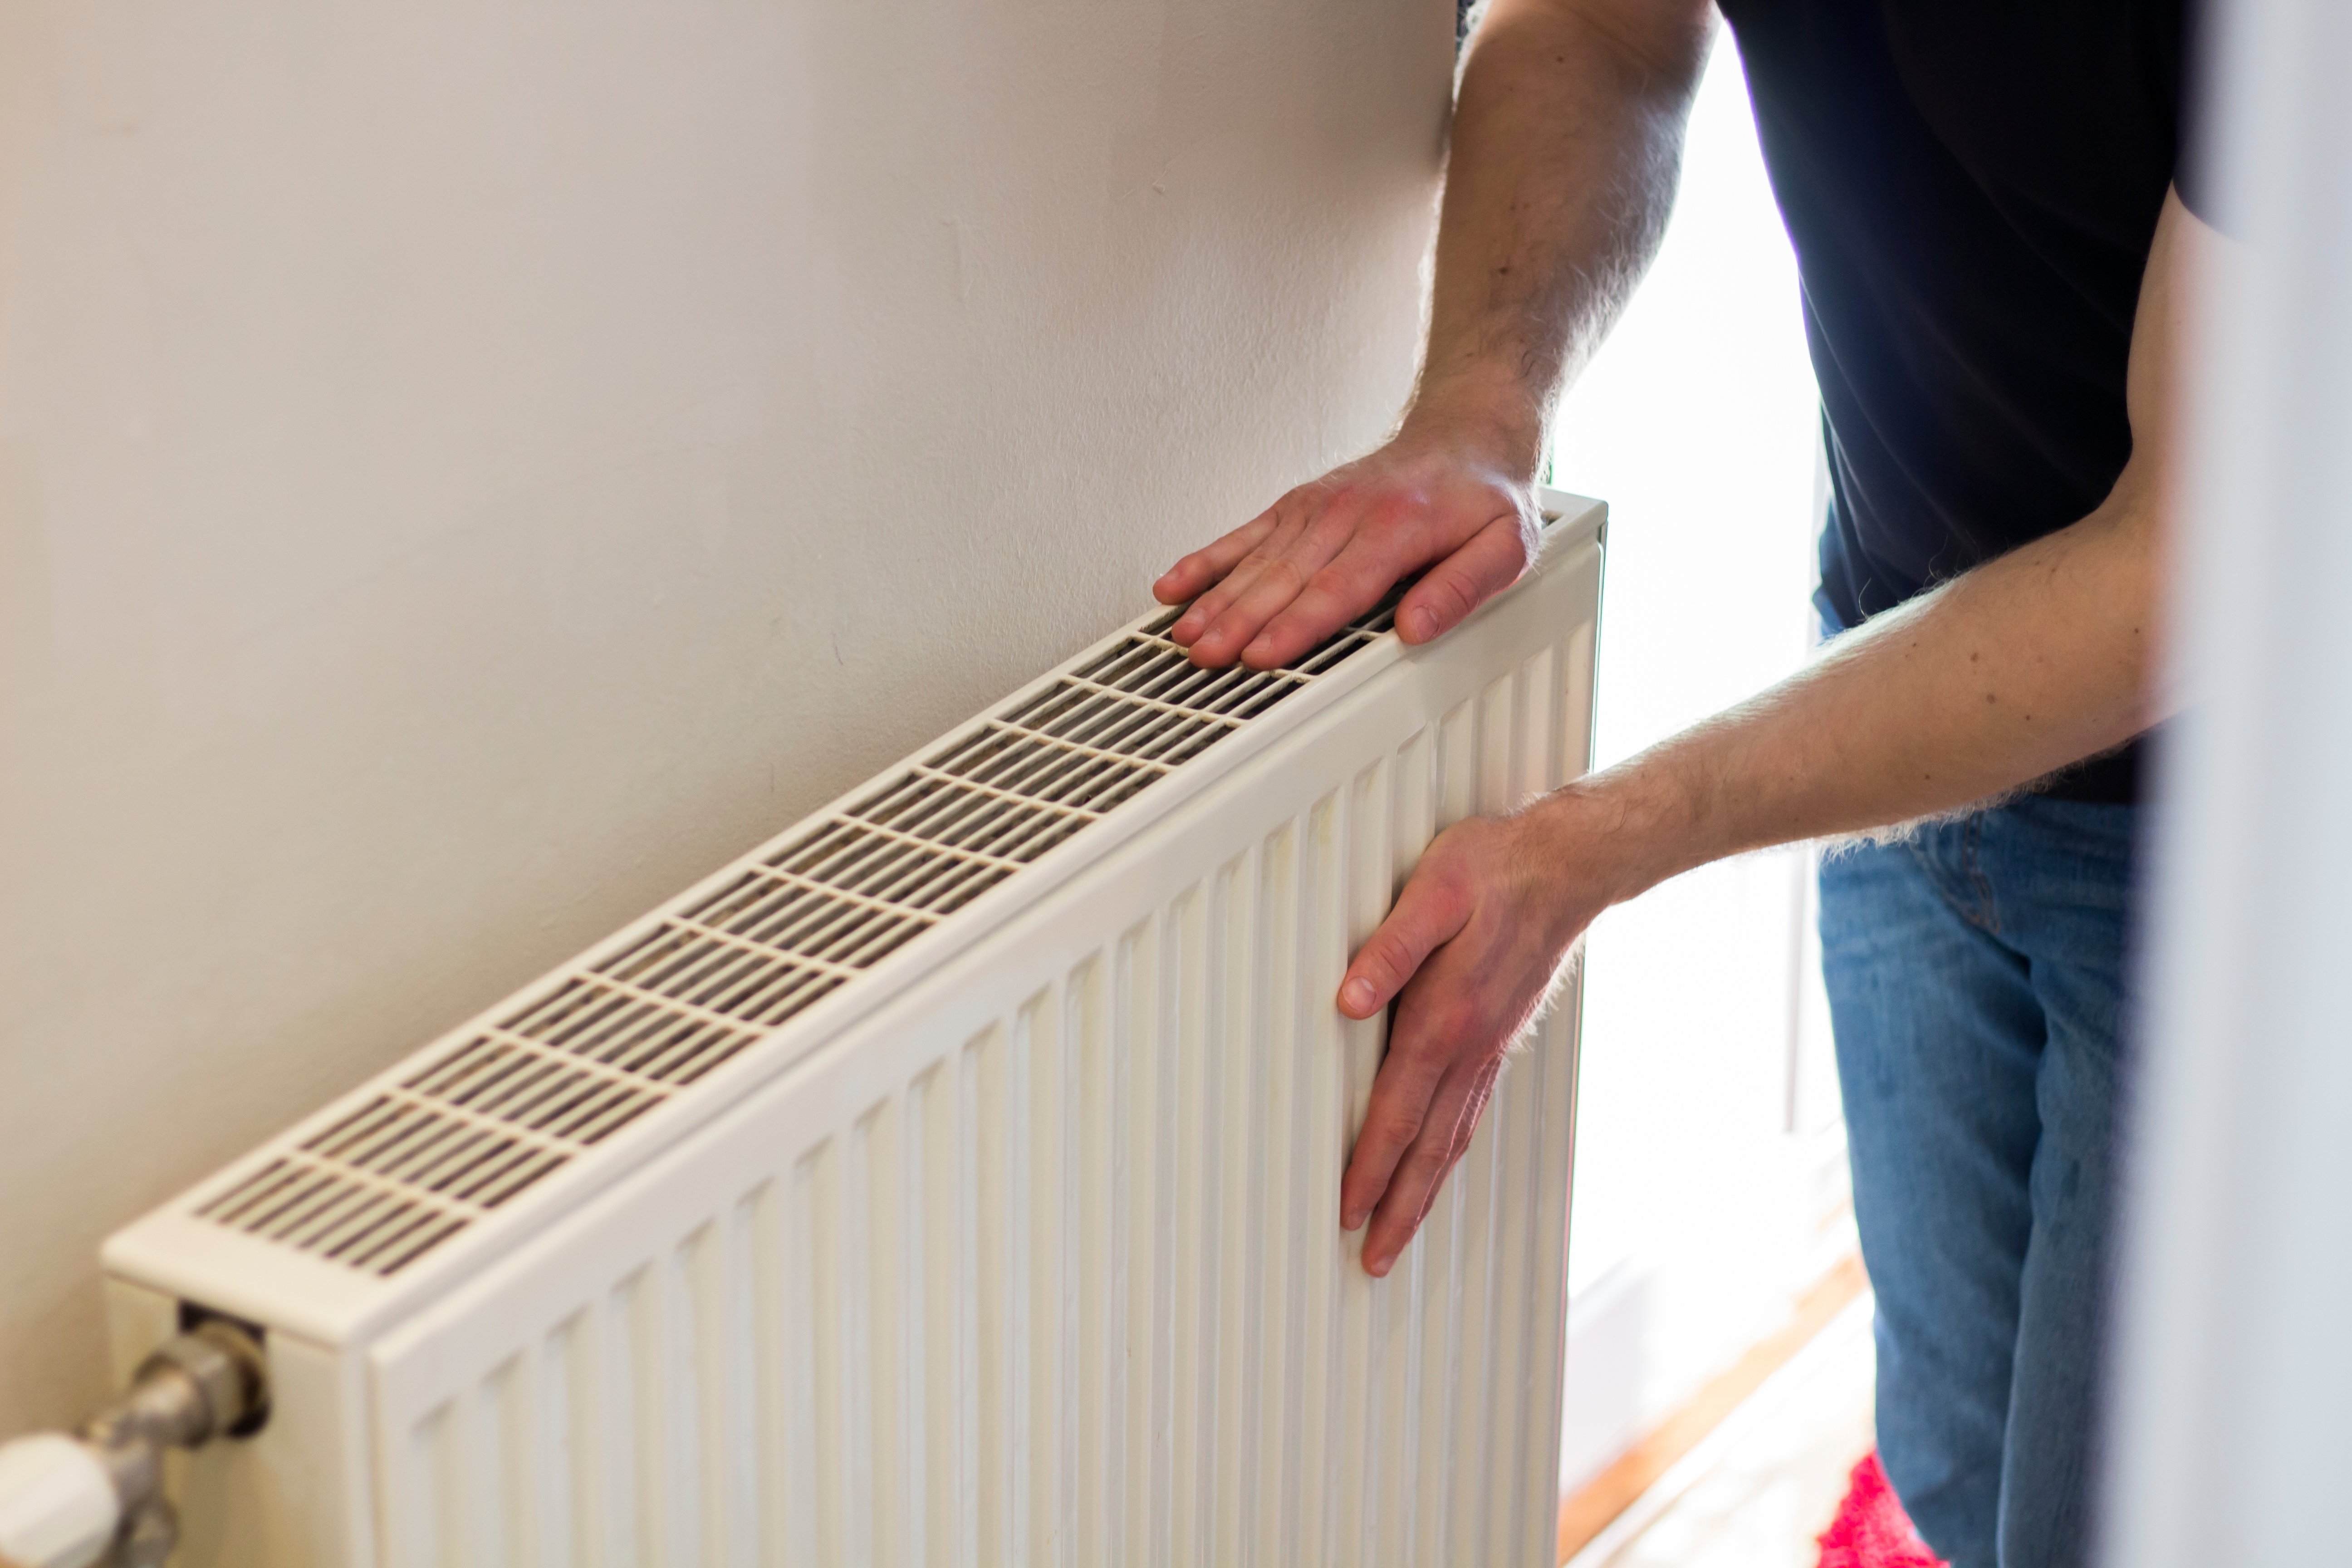 Man checking a radiator | Source: Shutterstock